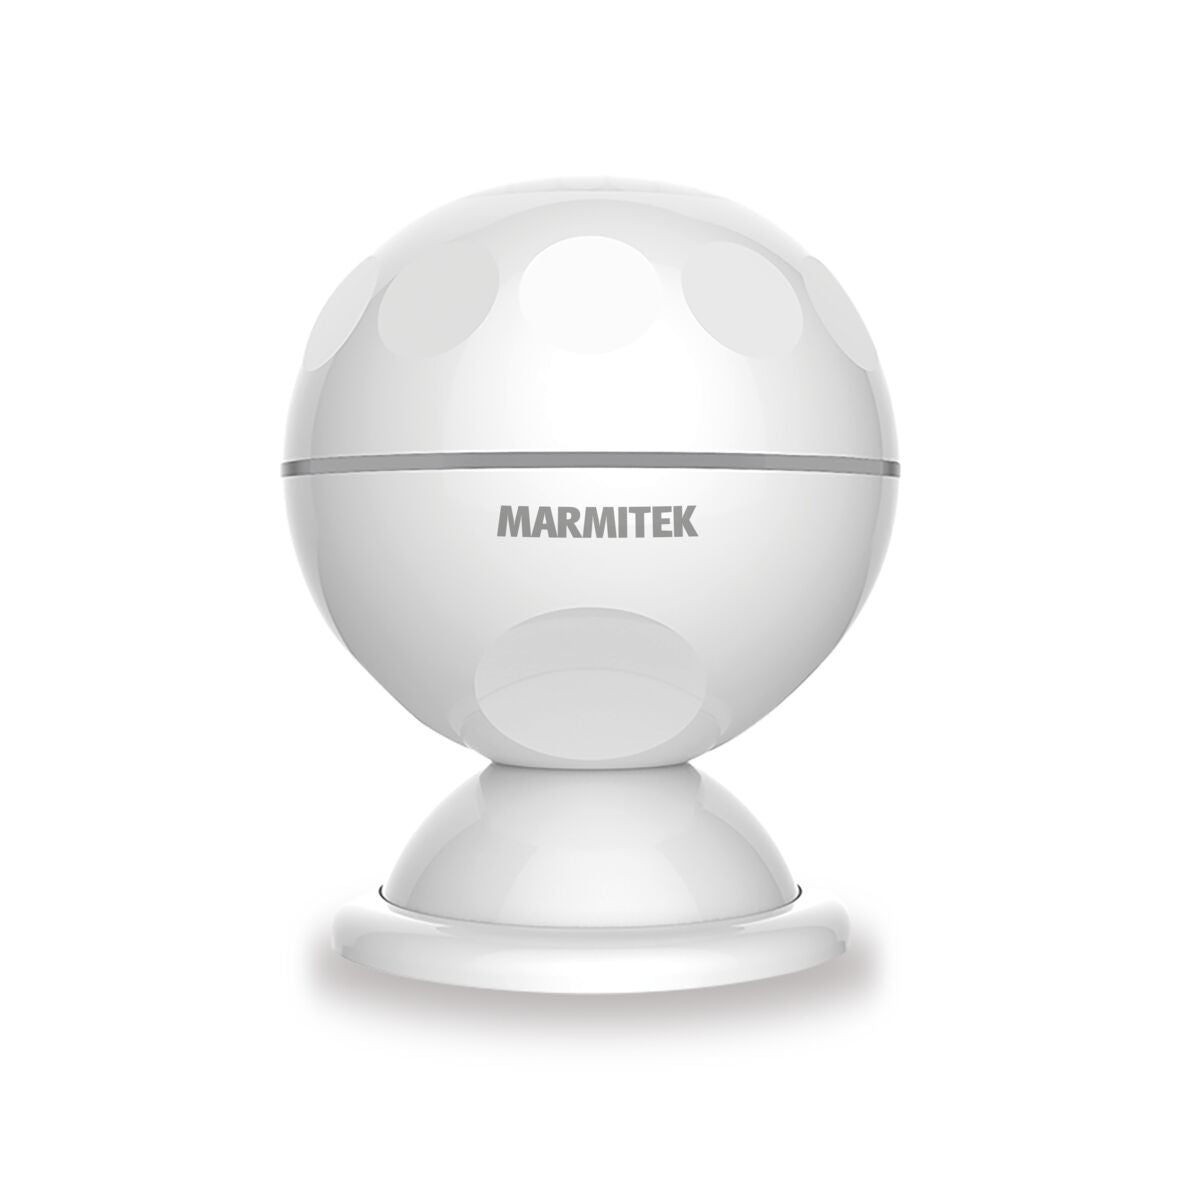 Sense SE - Motion sensor - Product Image with Marmitek logo | Marmitek